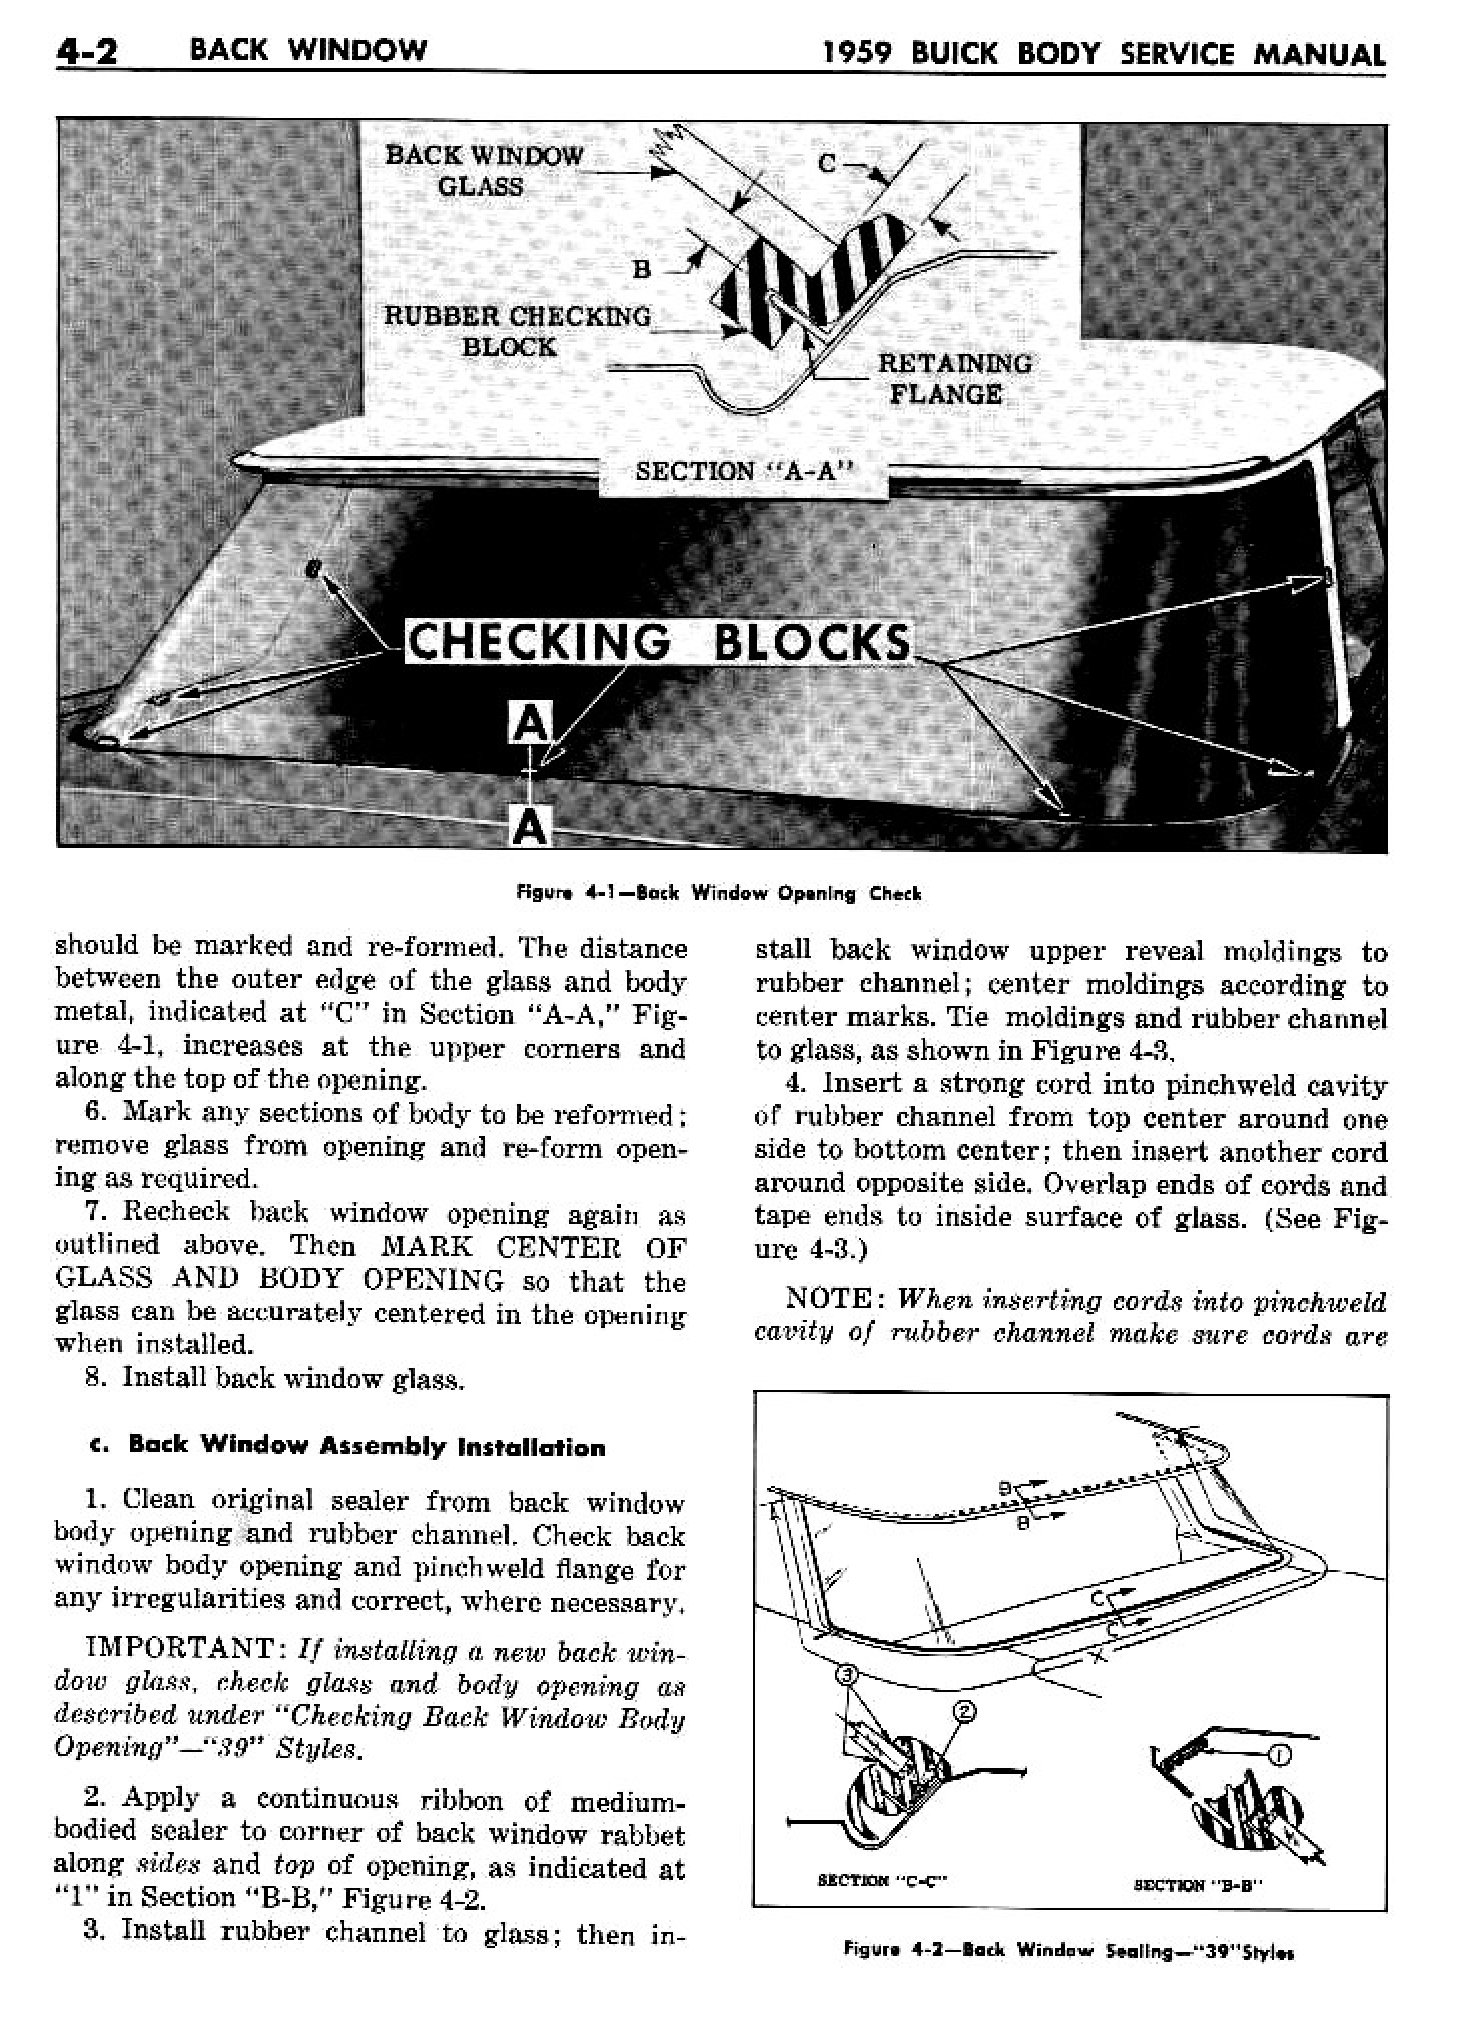 n_05 1959 Buick Body Service-Rear End_2.jpg